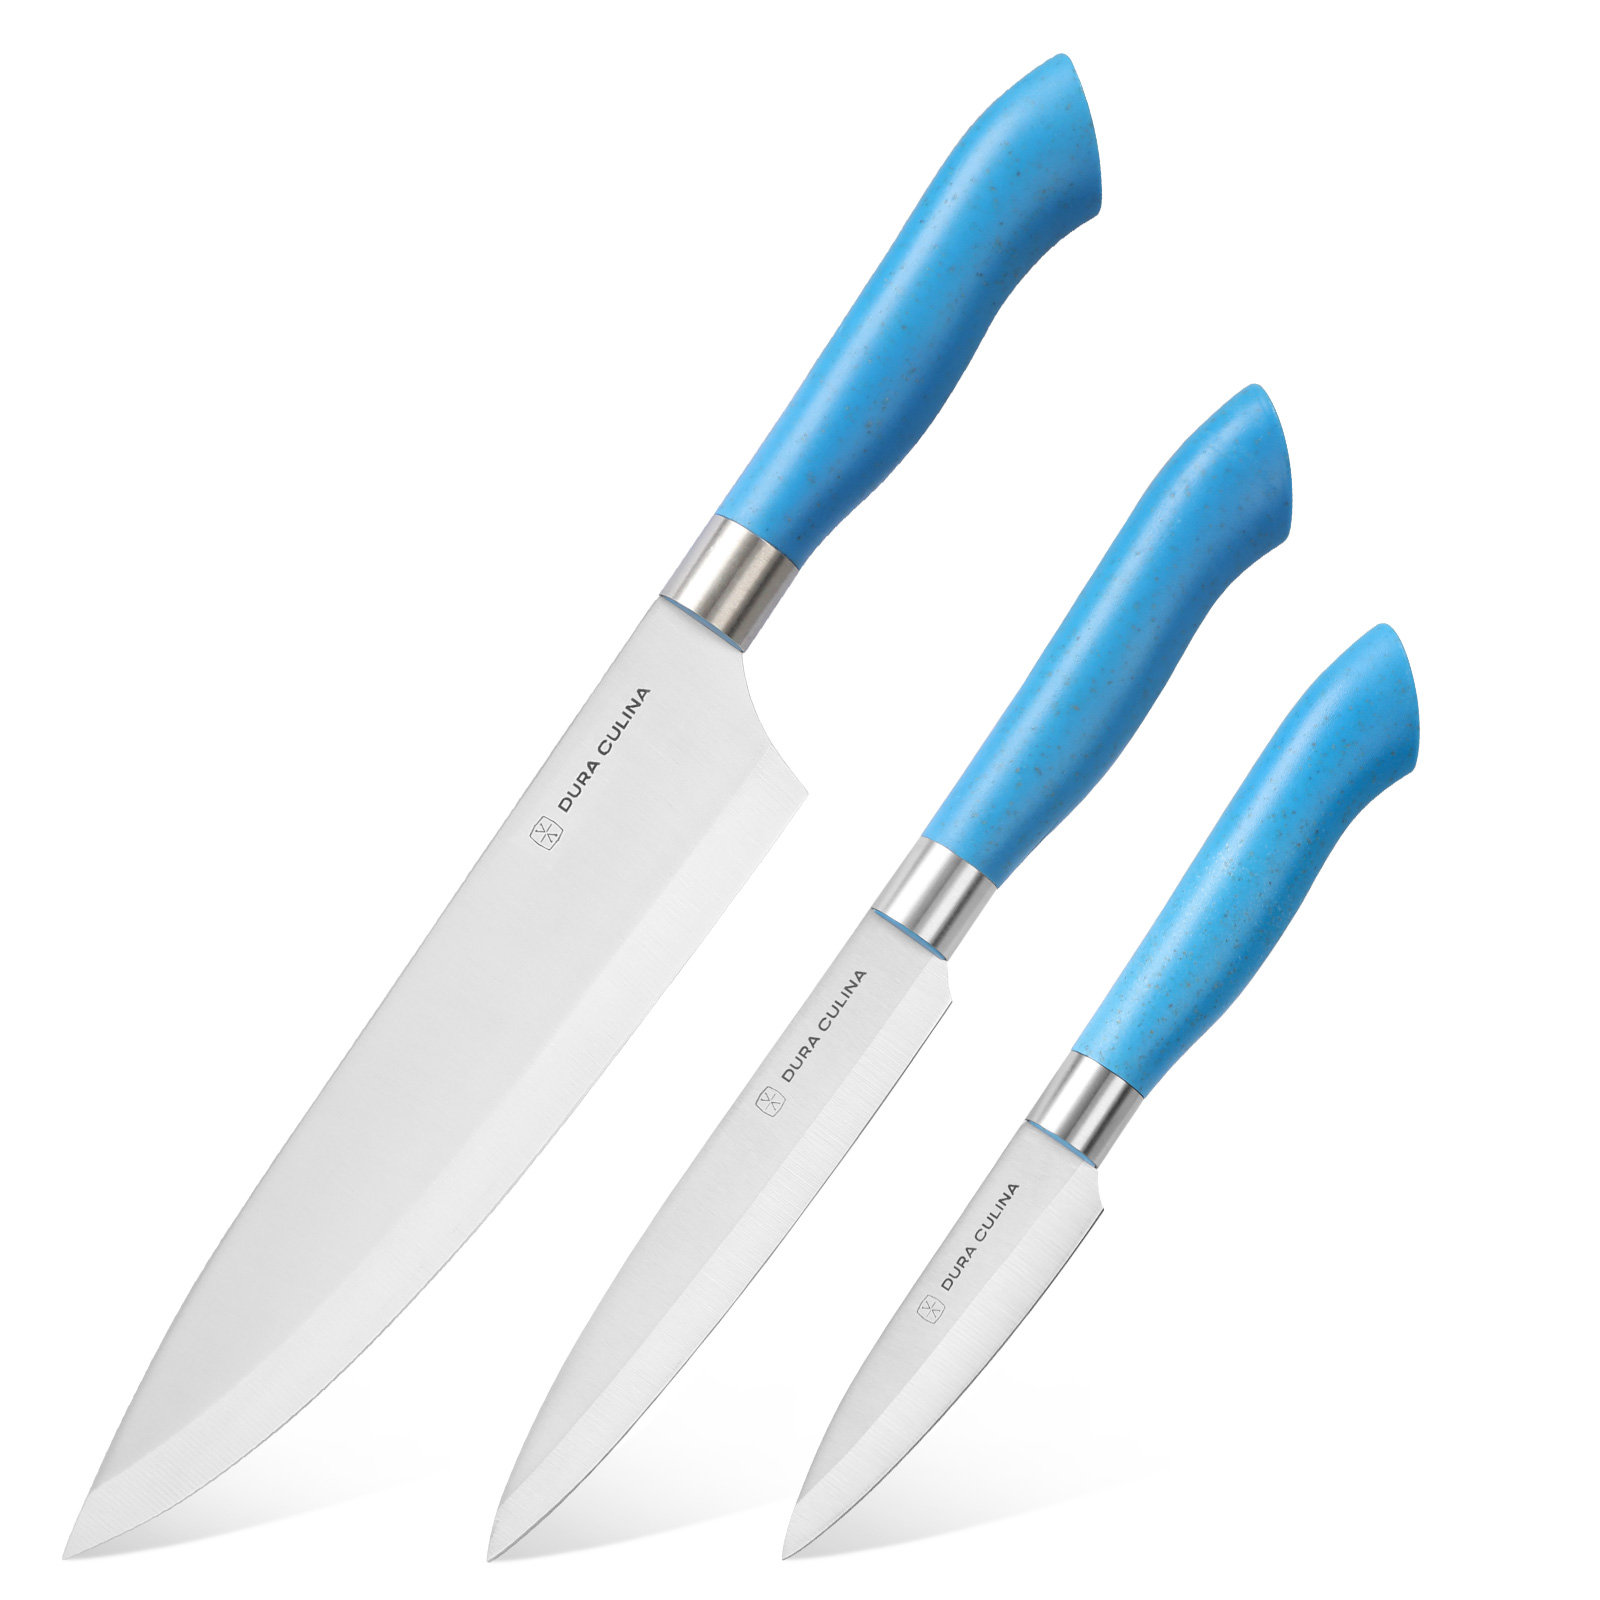 Nutriblade Knife Set of 3 by Granitestone, High Grade Professional